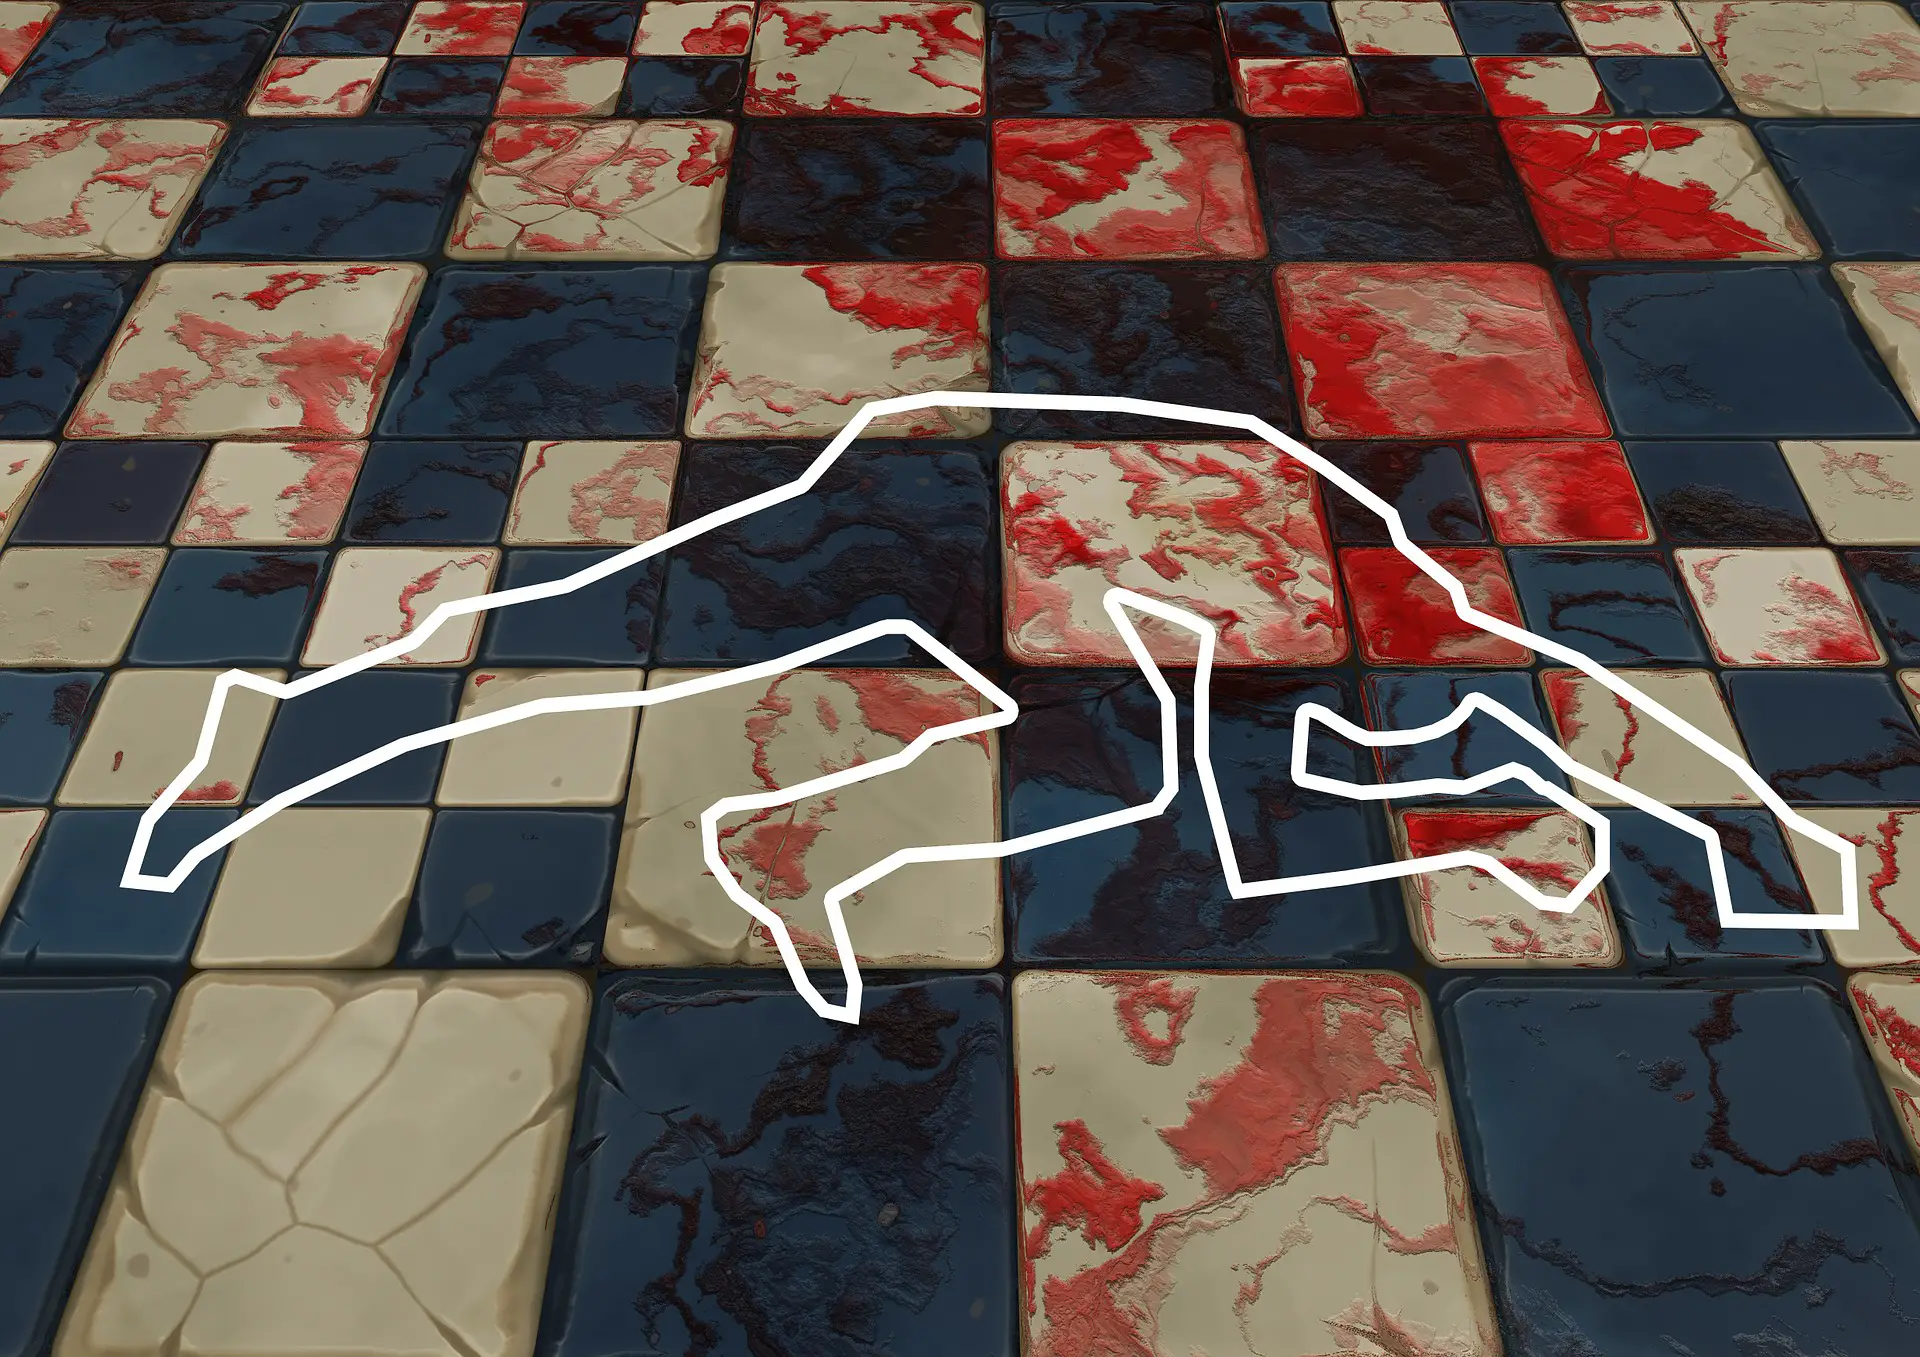 Crimedoor app using augmented reality recreates crime scene